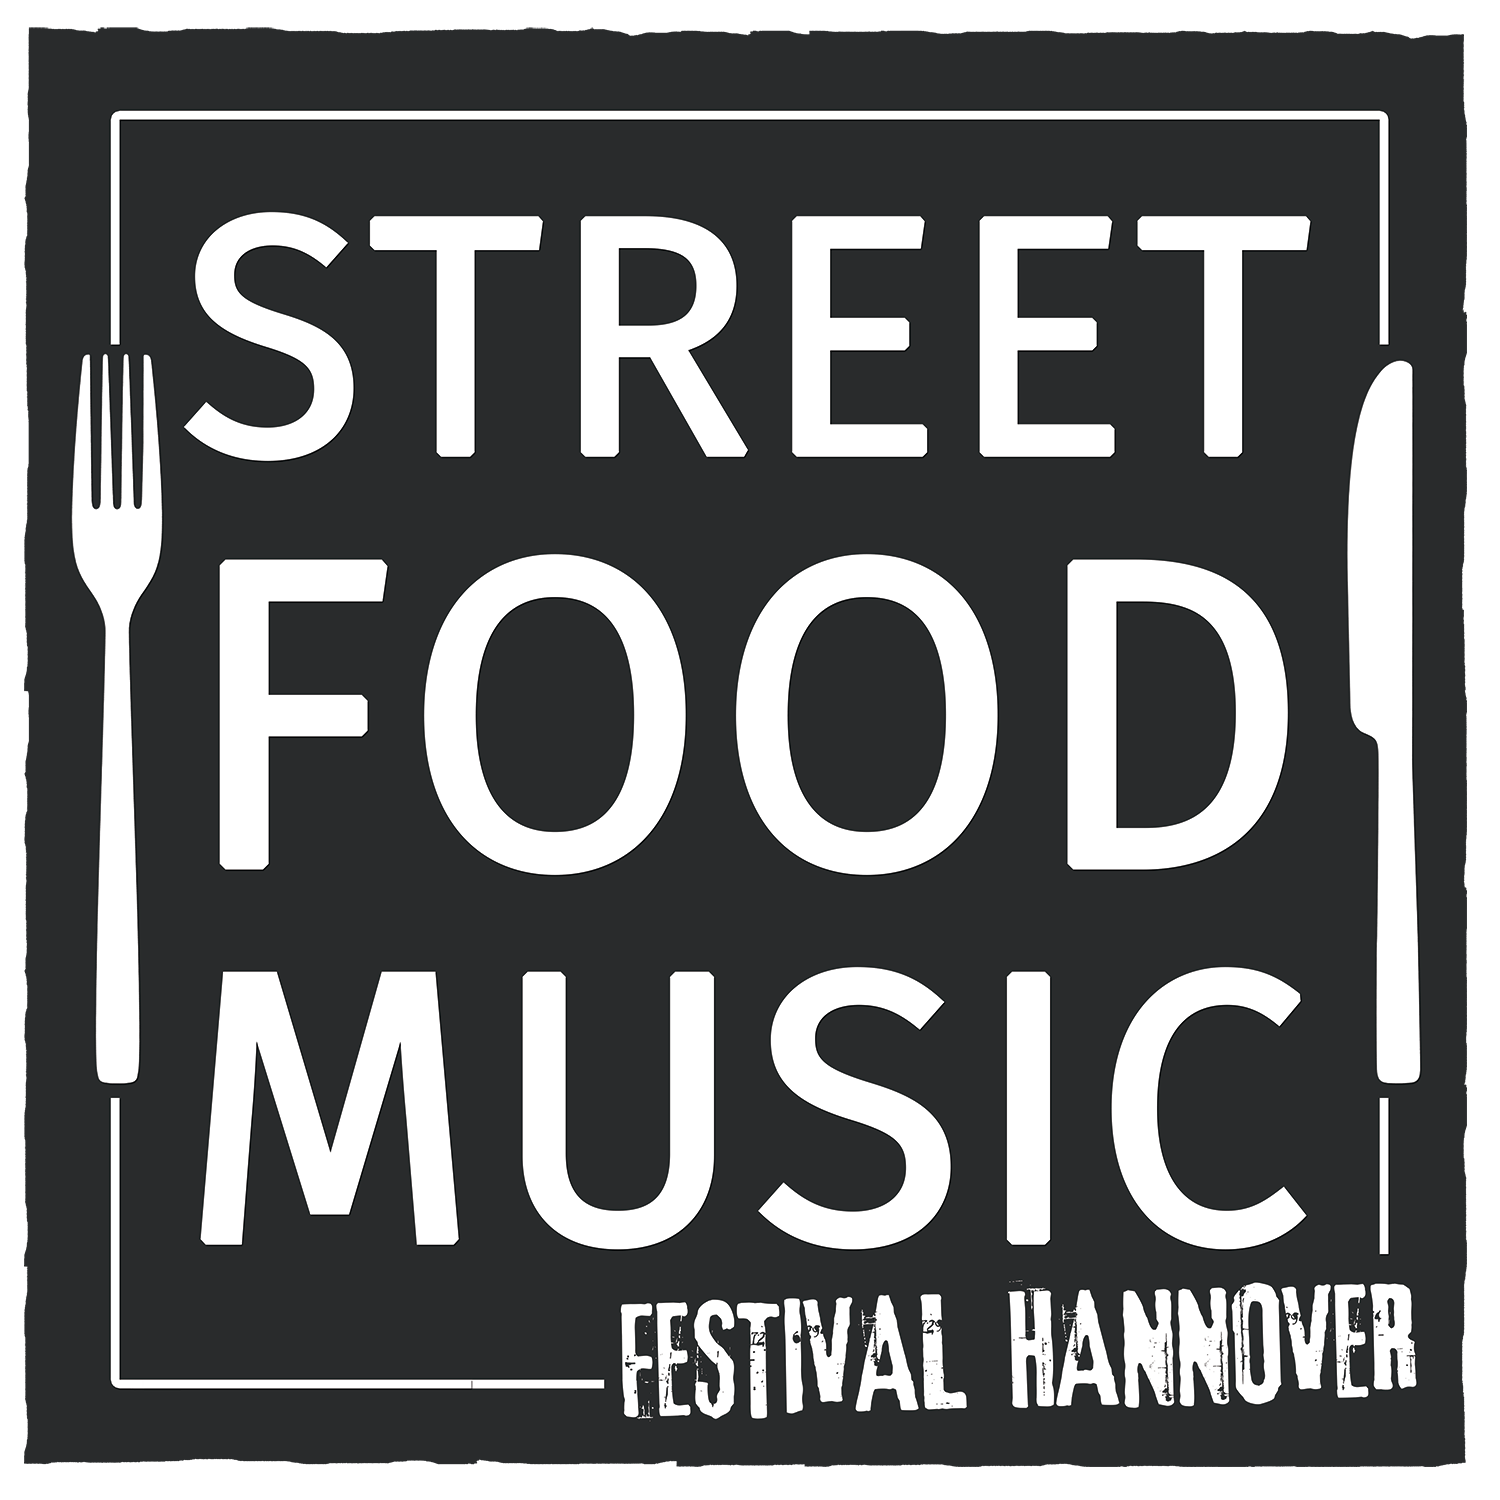 Street Food & Music Festival Hannover